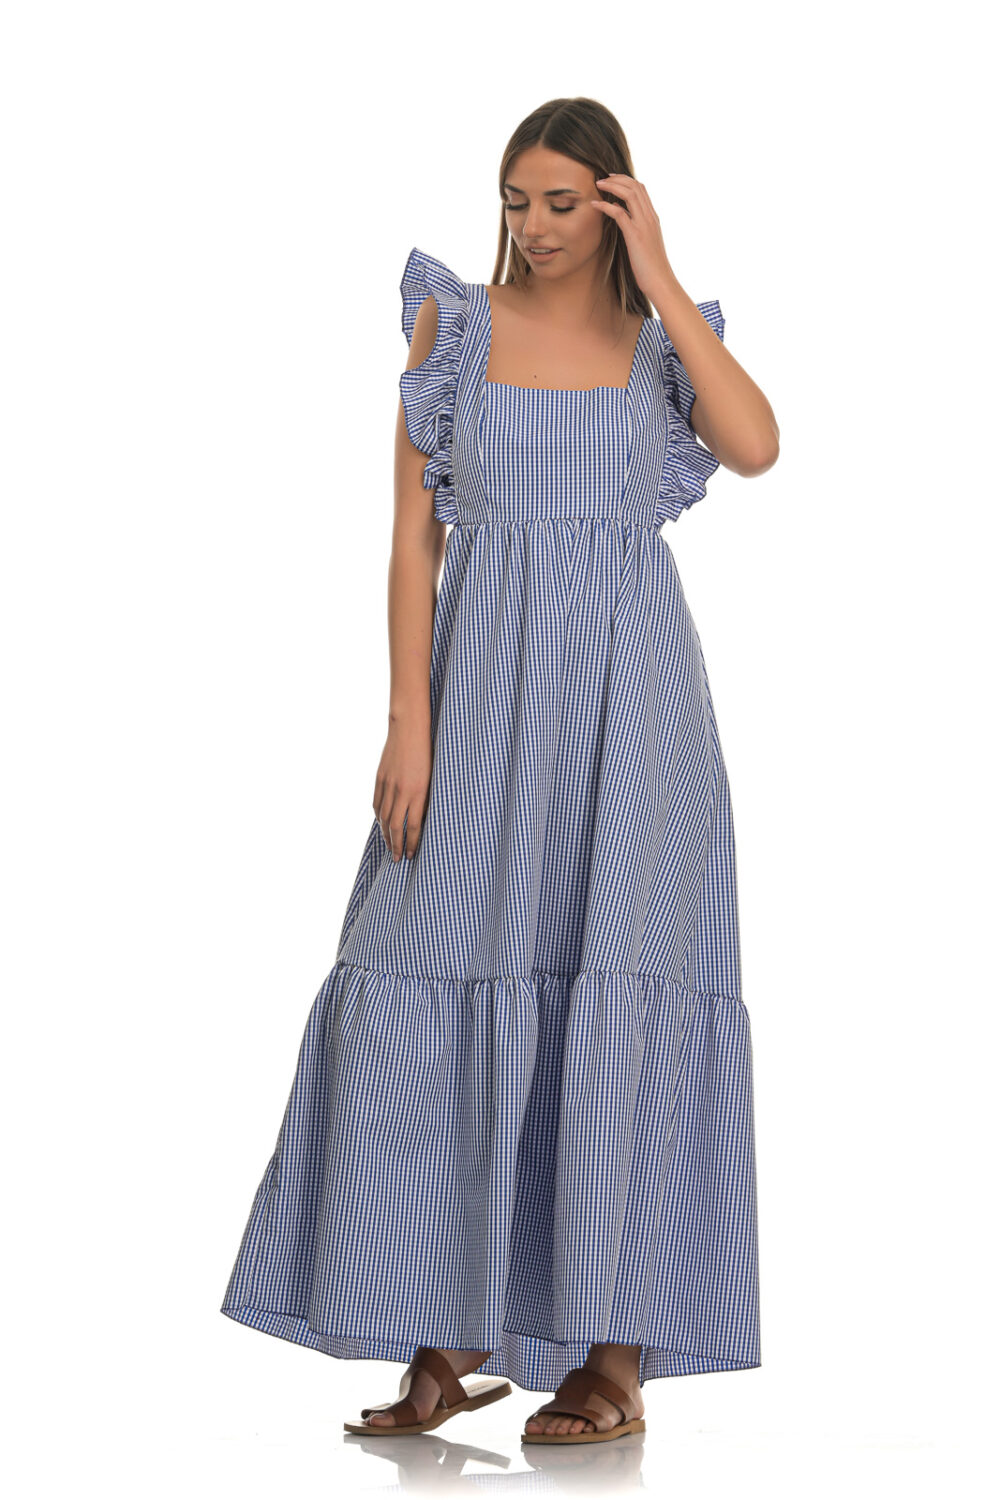 Plaid long dress blue